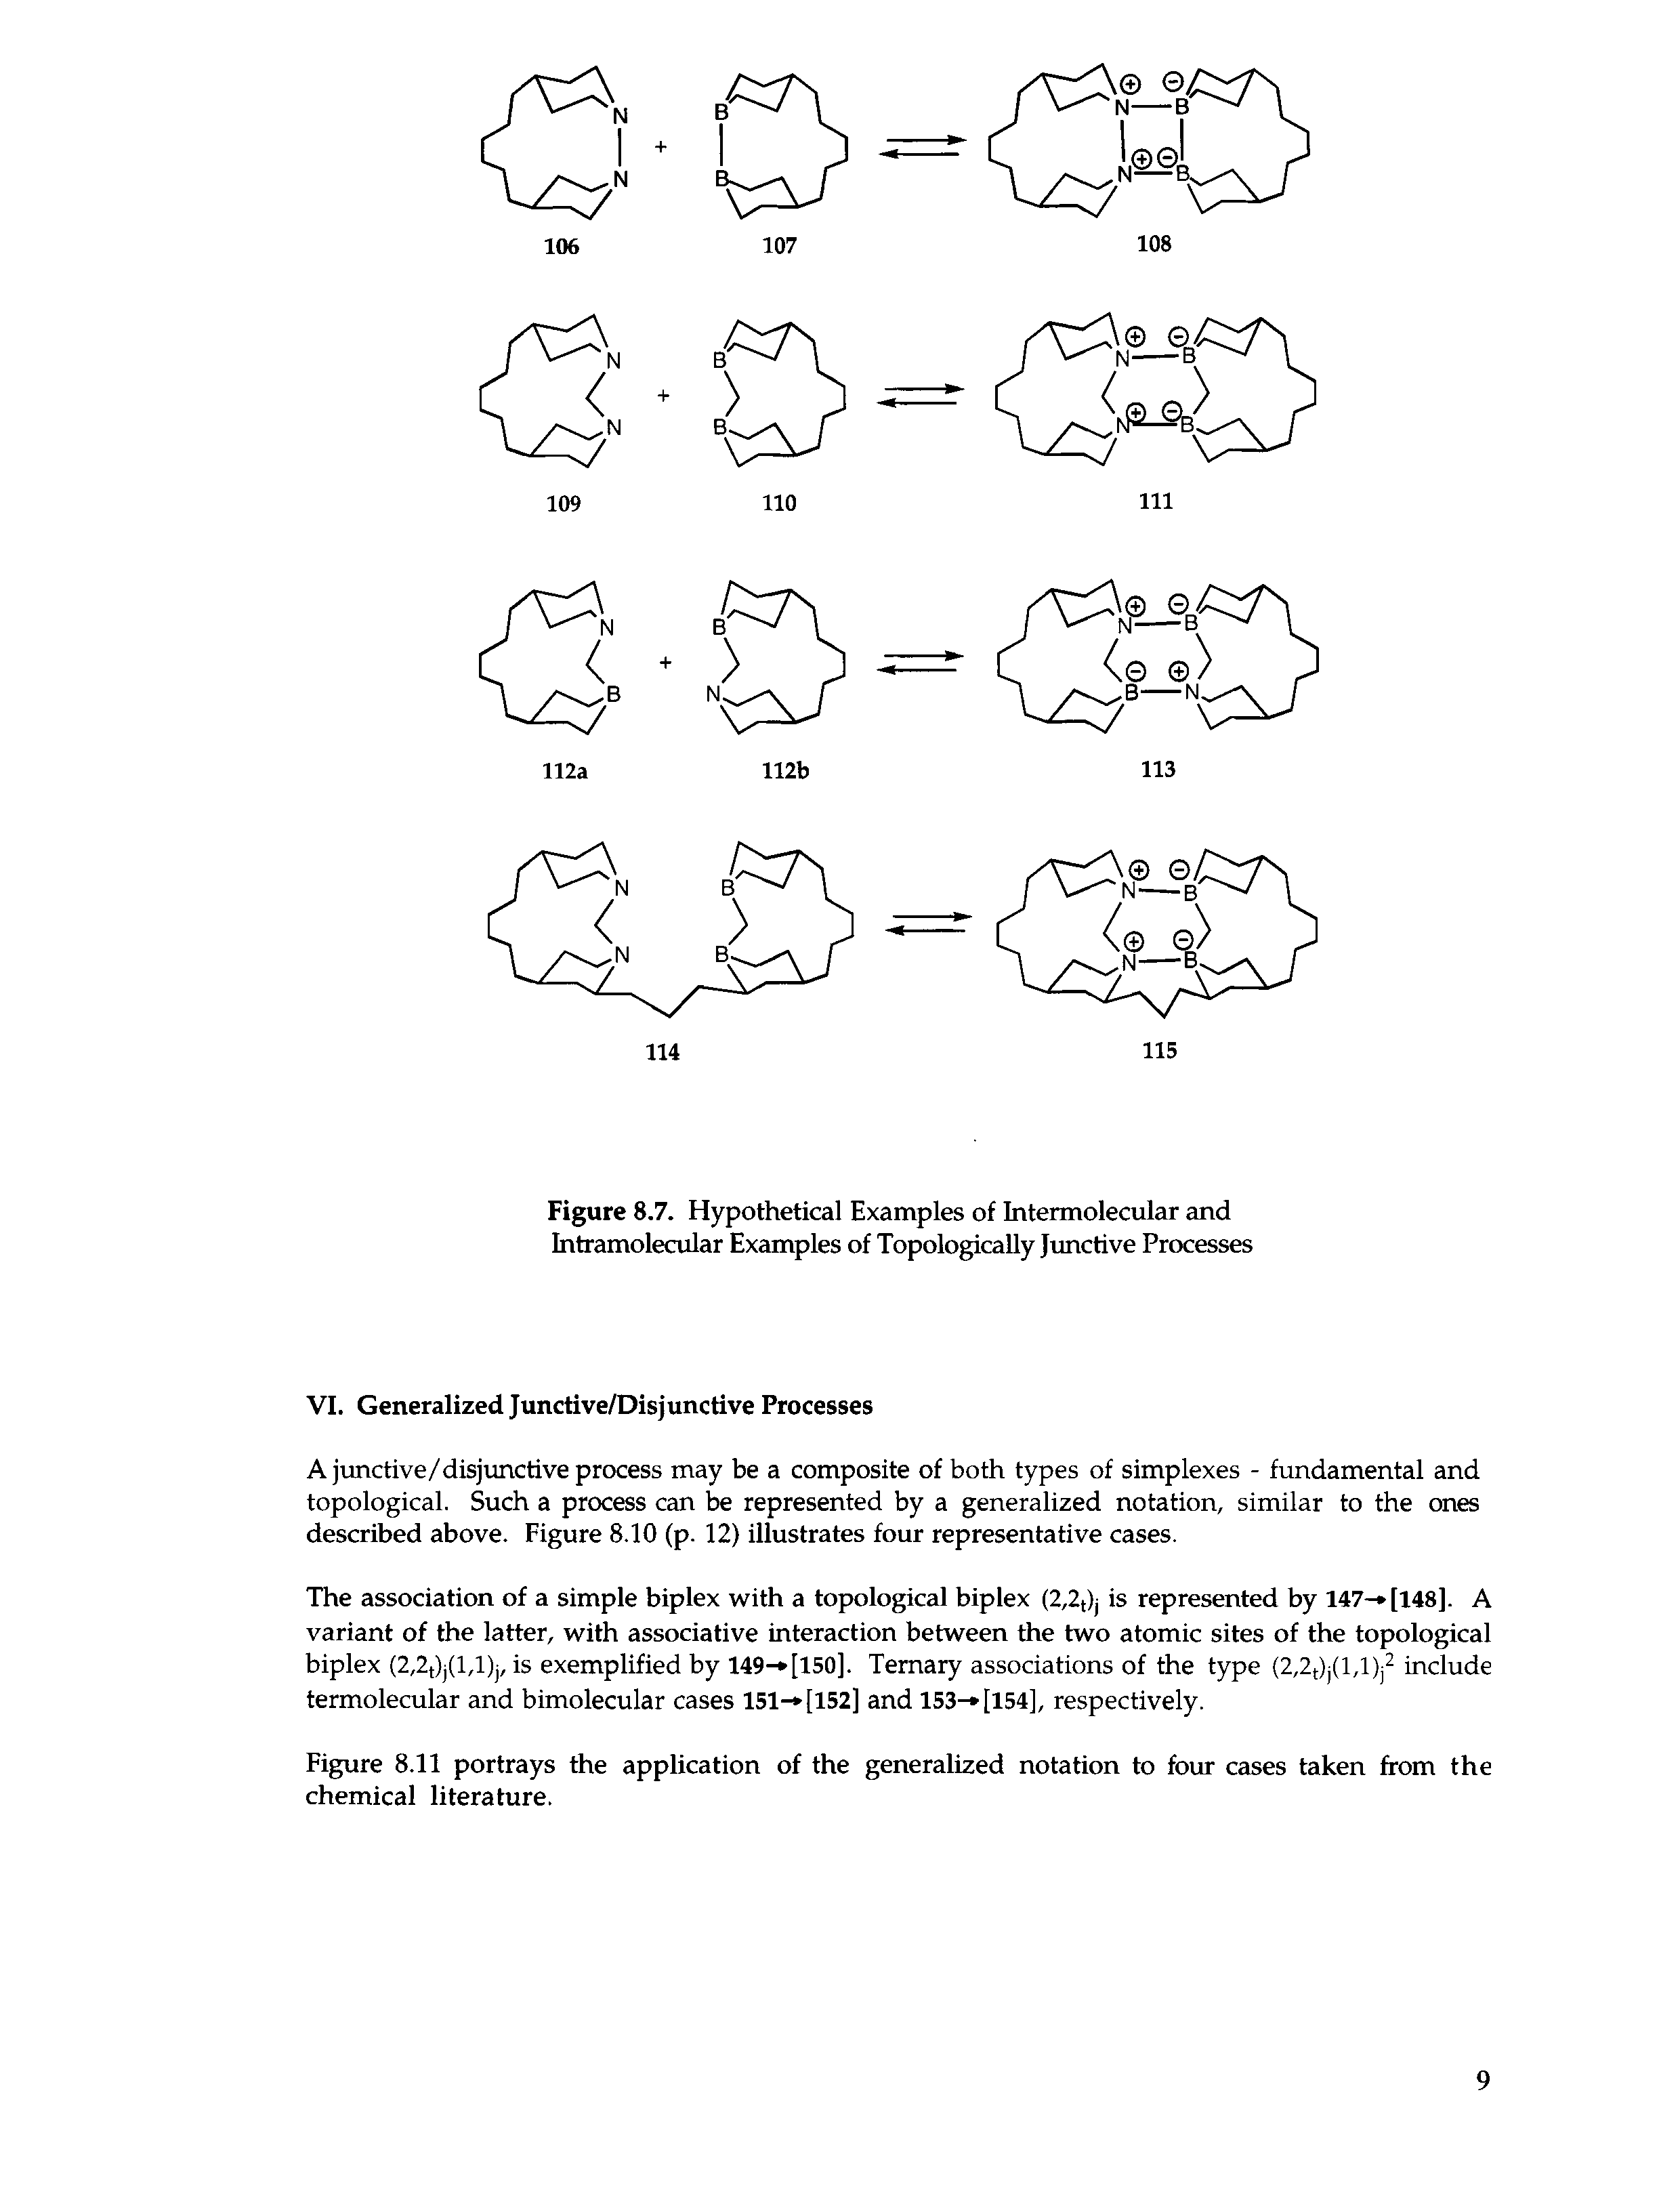 Figure 8.7. Hypothetical Examples of Intermolecular and Intramolecular Examples of Topologically Junctive Processes...